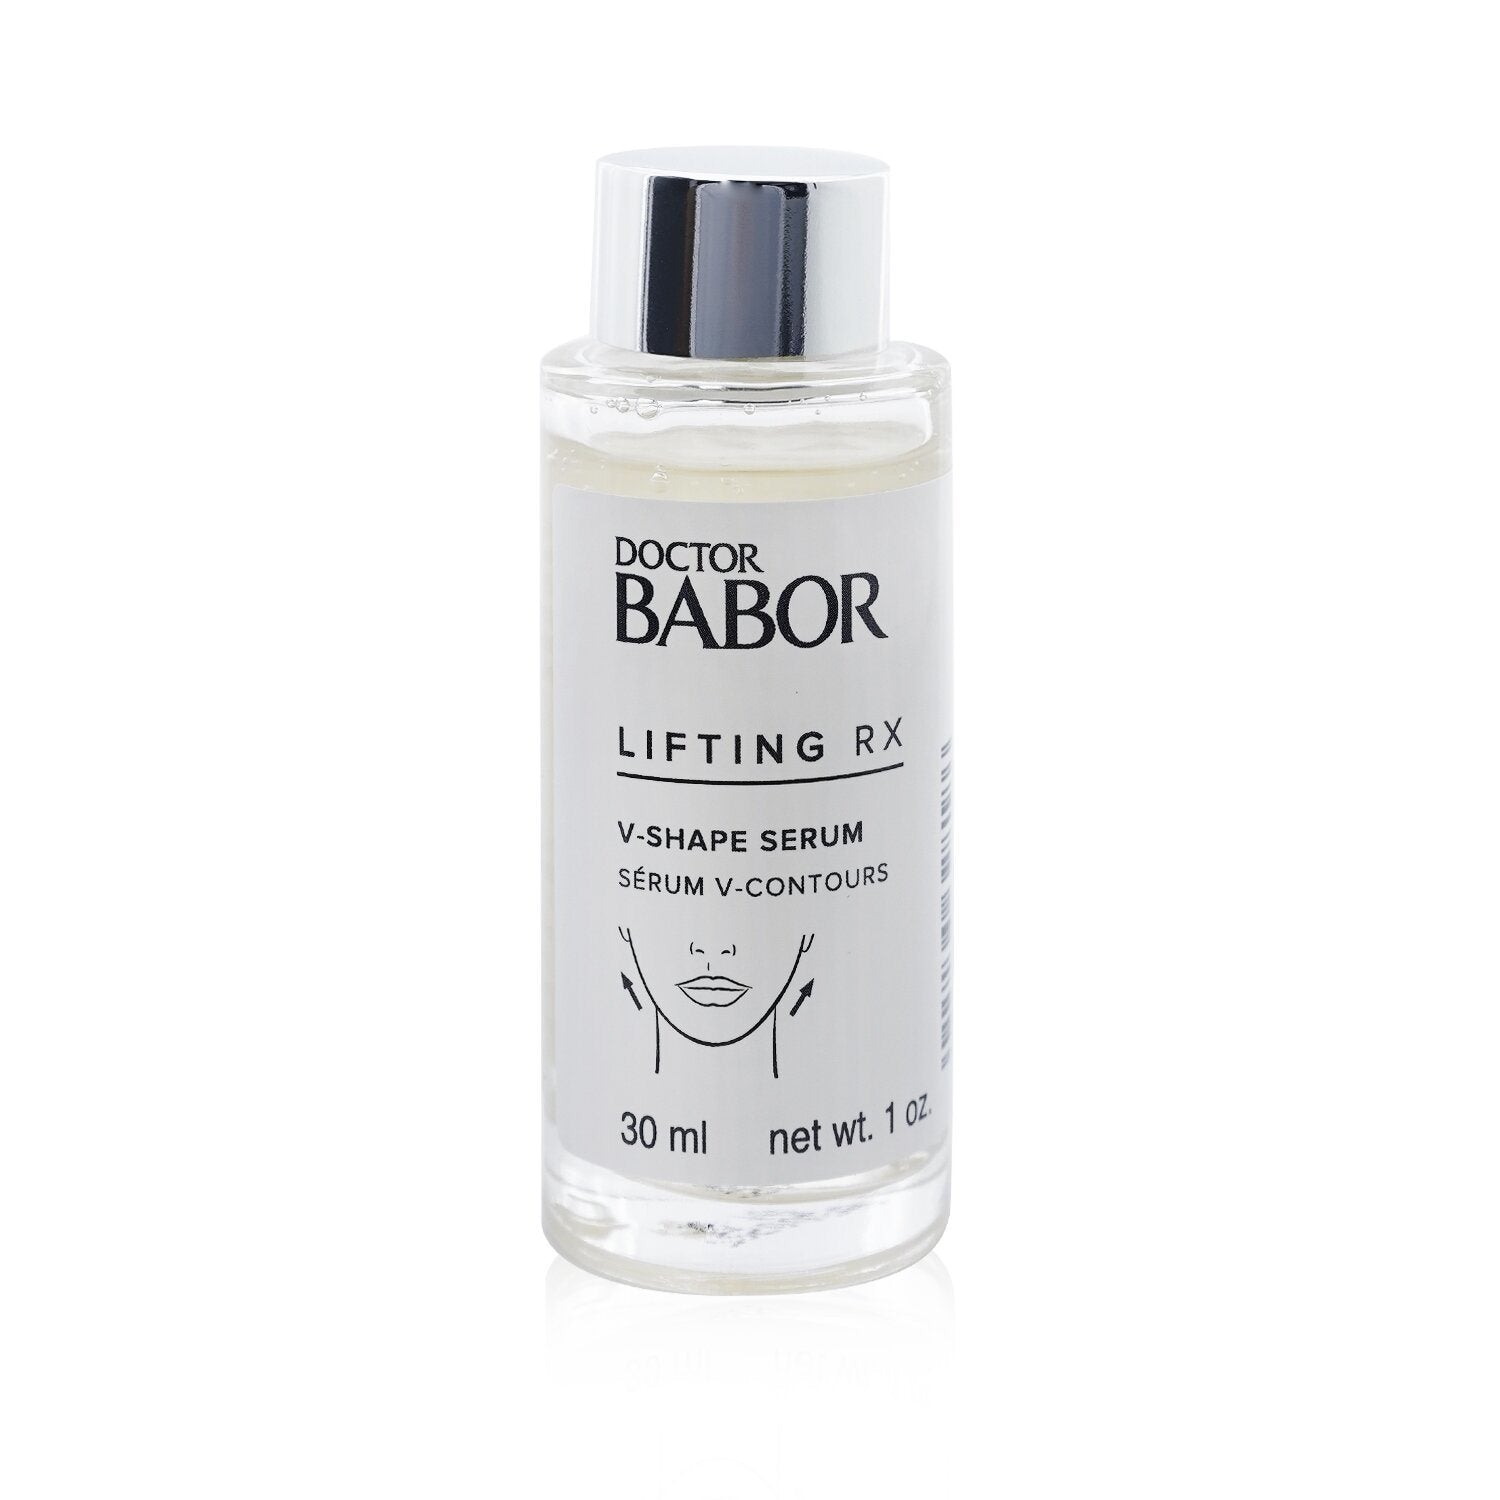 BABOR - Doctor Babor Lifting Rx V-Shape Serum - 30ml/1oz 3P's Inclusive Beauty